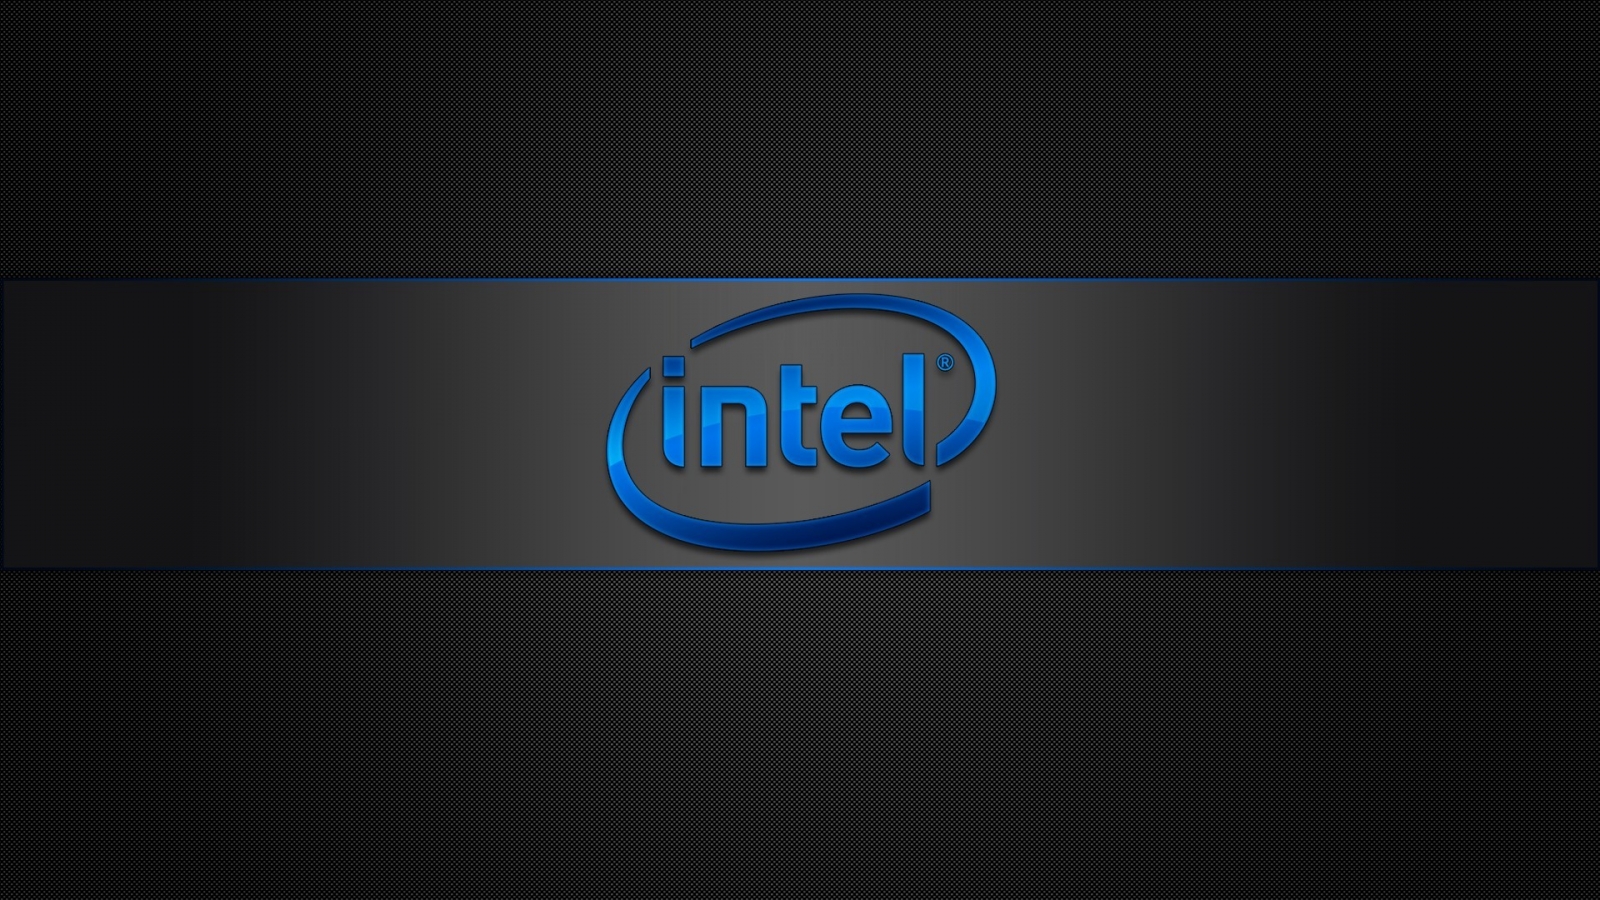 Intel for 1600 x 900 HDTV resolution